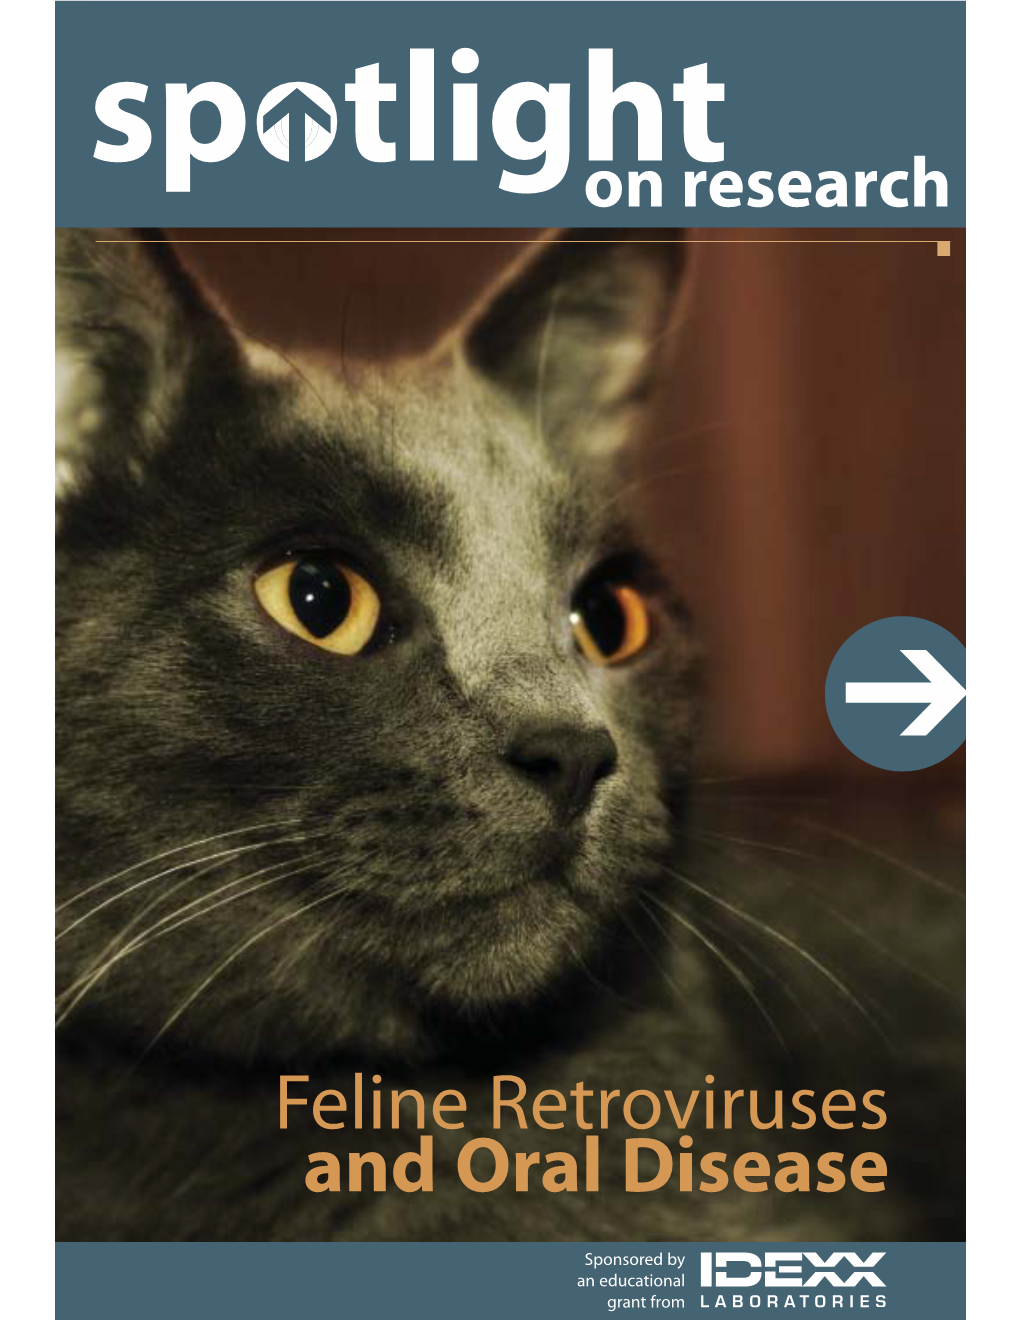 Feline Retroviruses and Oral Disease